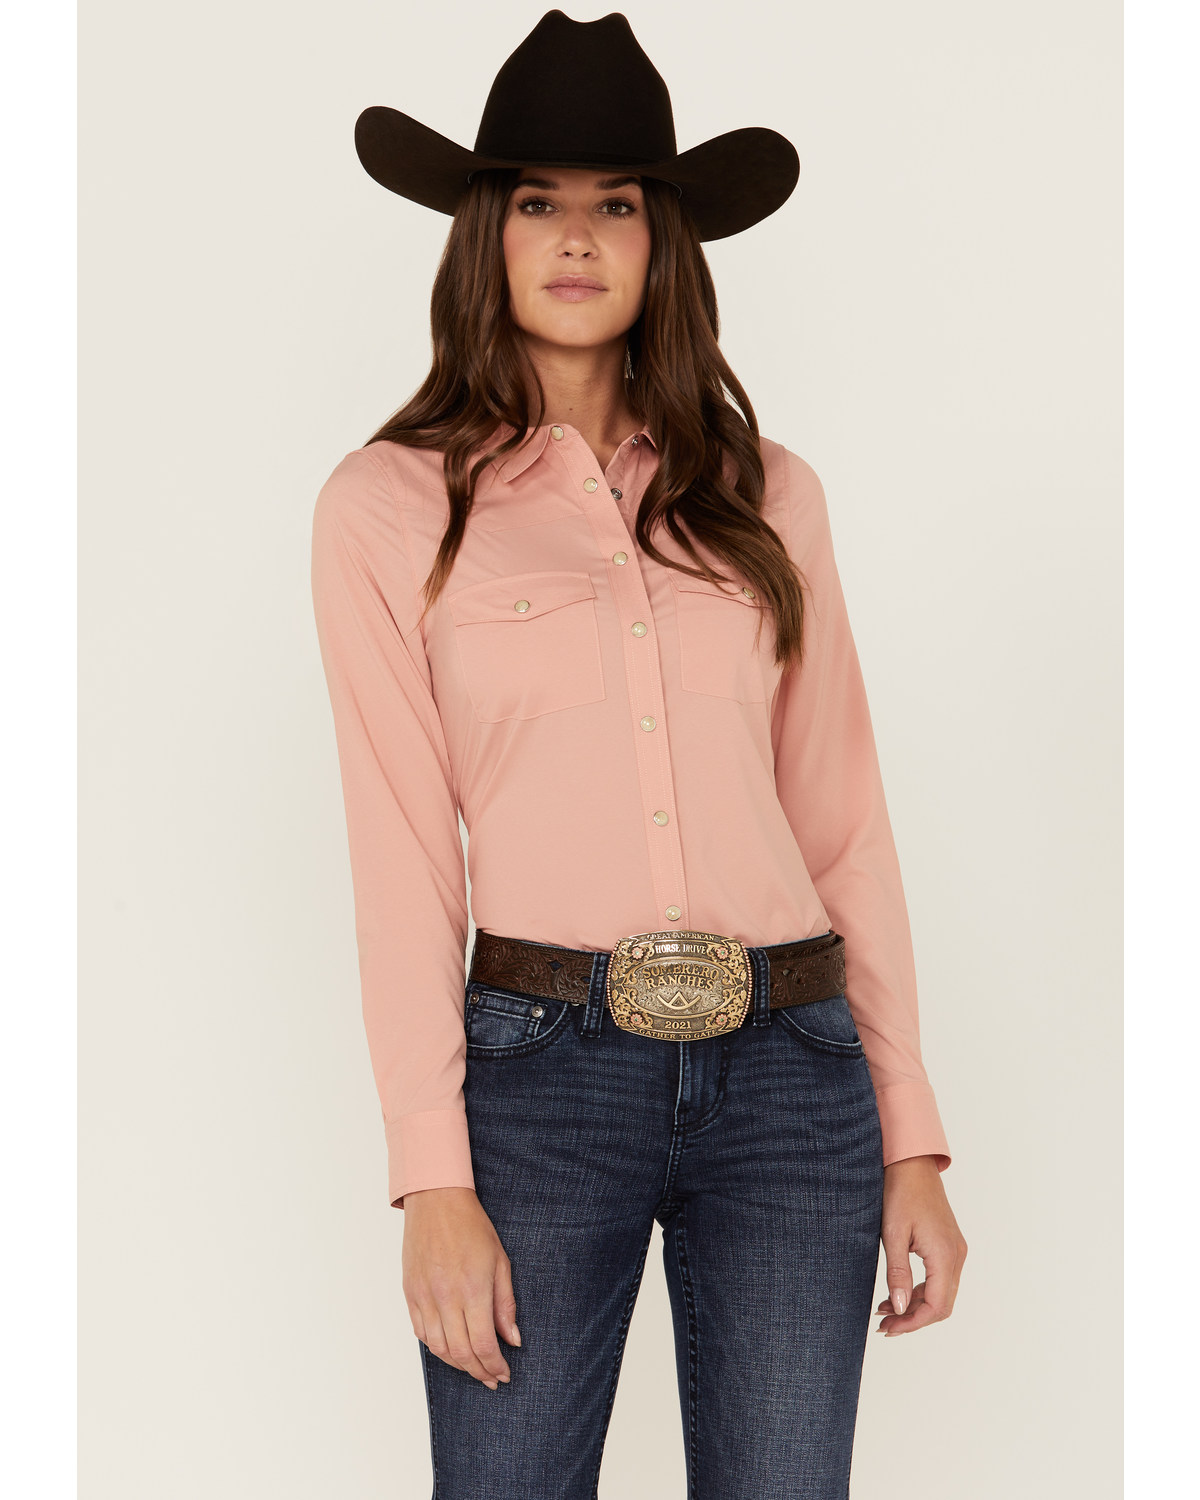 RANK 45® Women's Outdoor Vented Yoke Long Sleeve Riding Snap Western Shirt